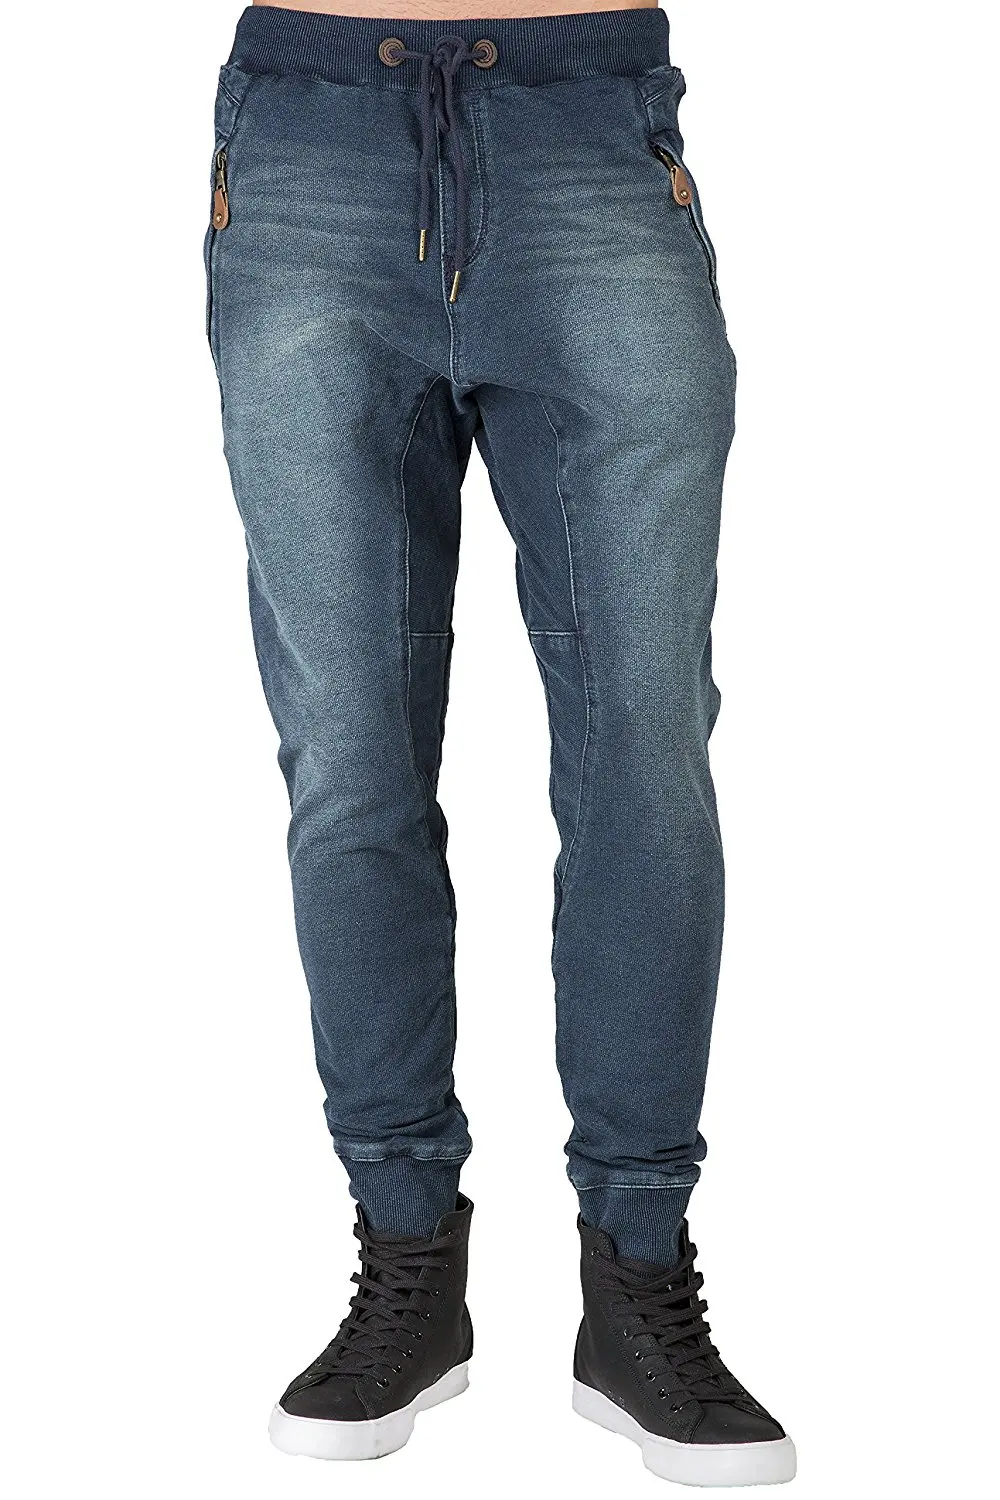 Cheap Crotch Zipper Jeans, find Crotch Zipper Jeans deals on line at ...